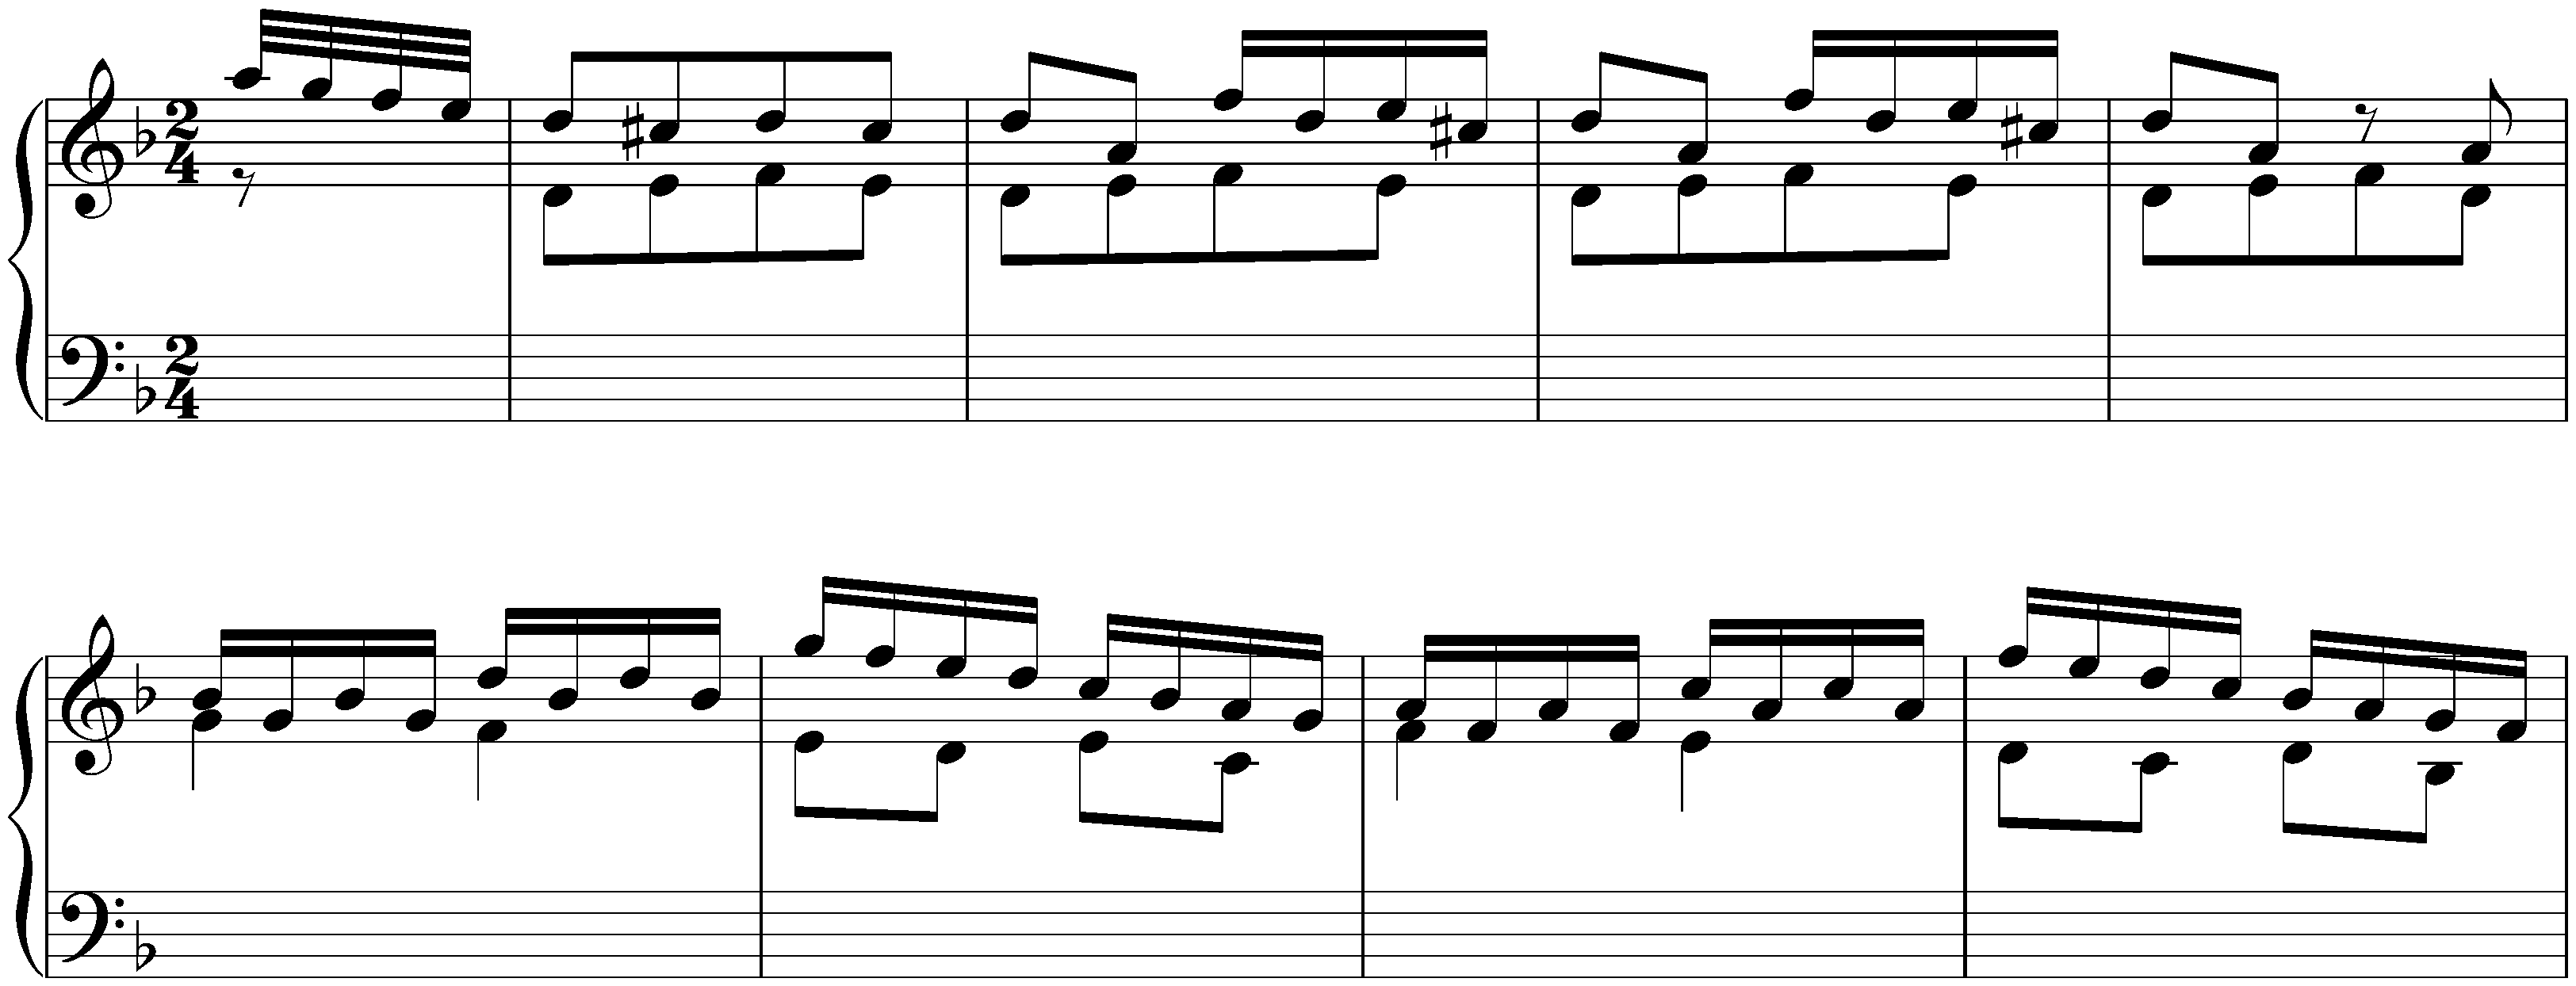 Sonatas found in New York; 2. D minor